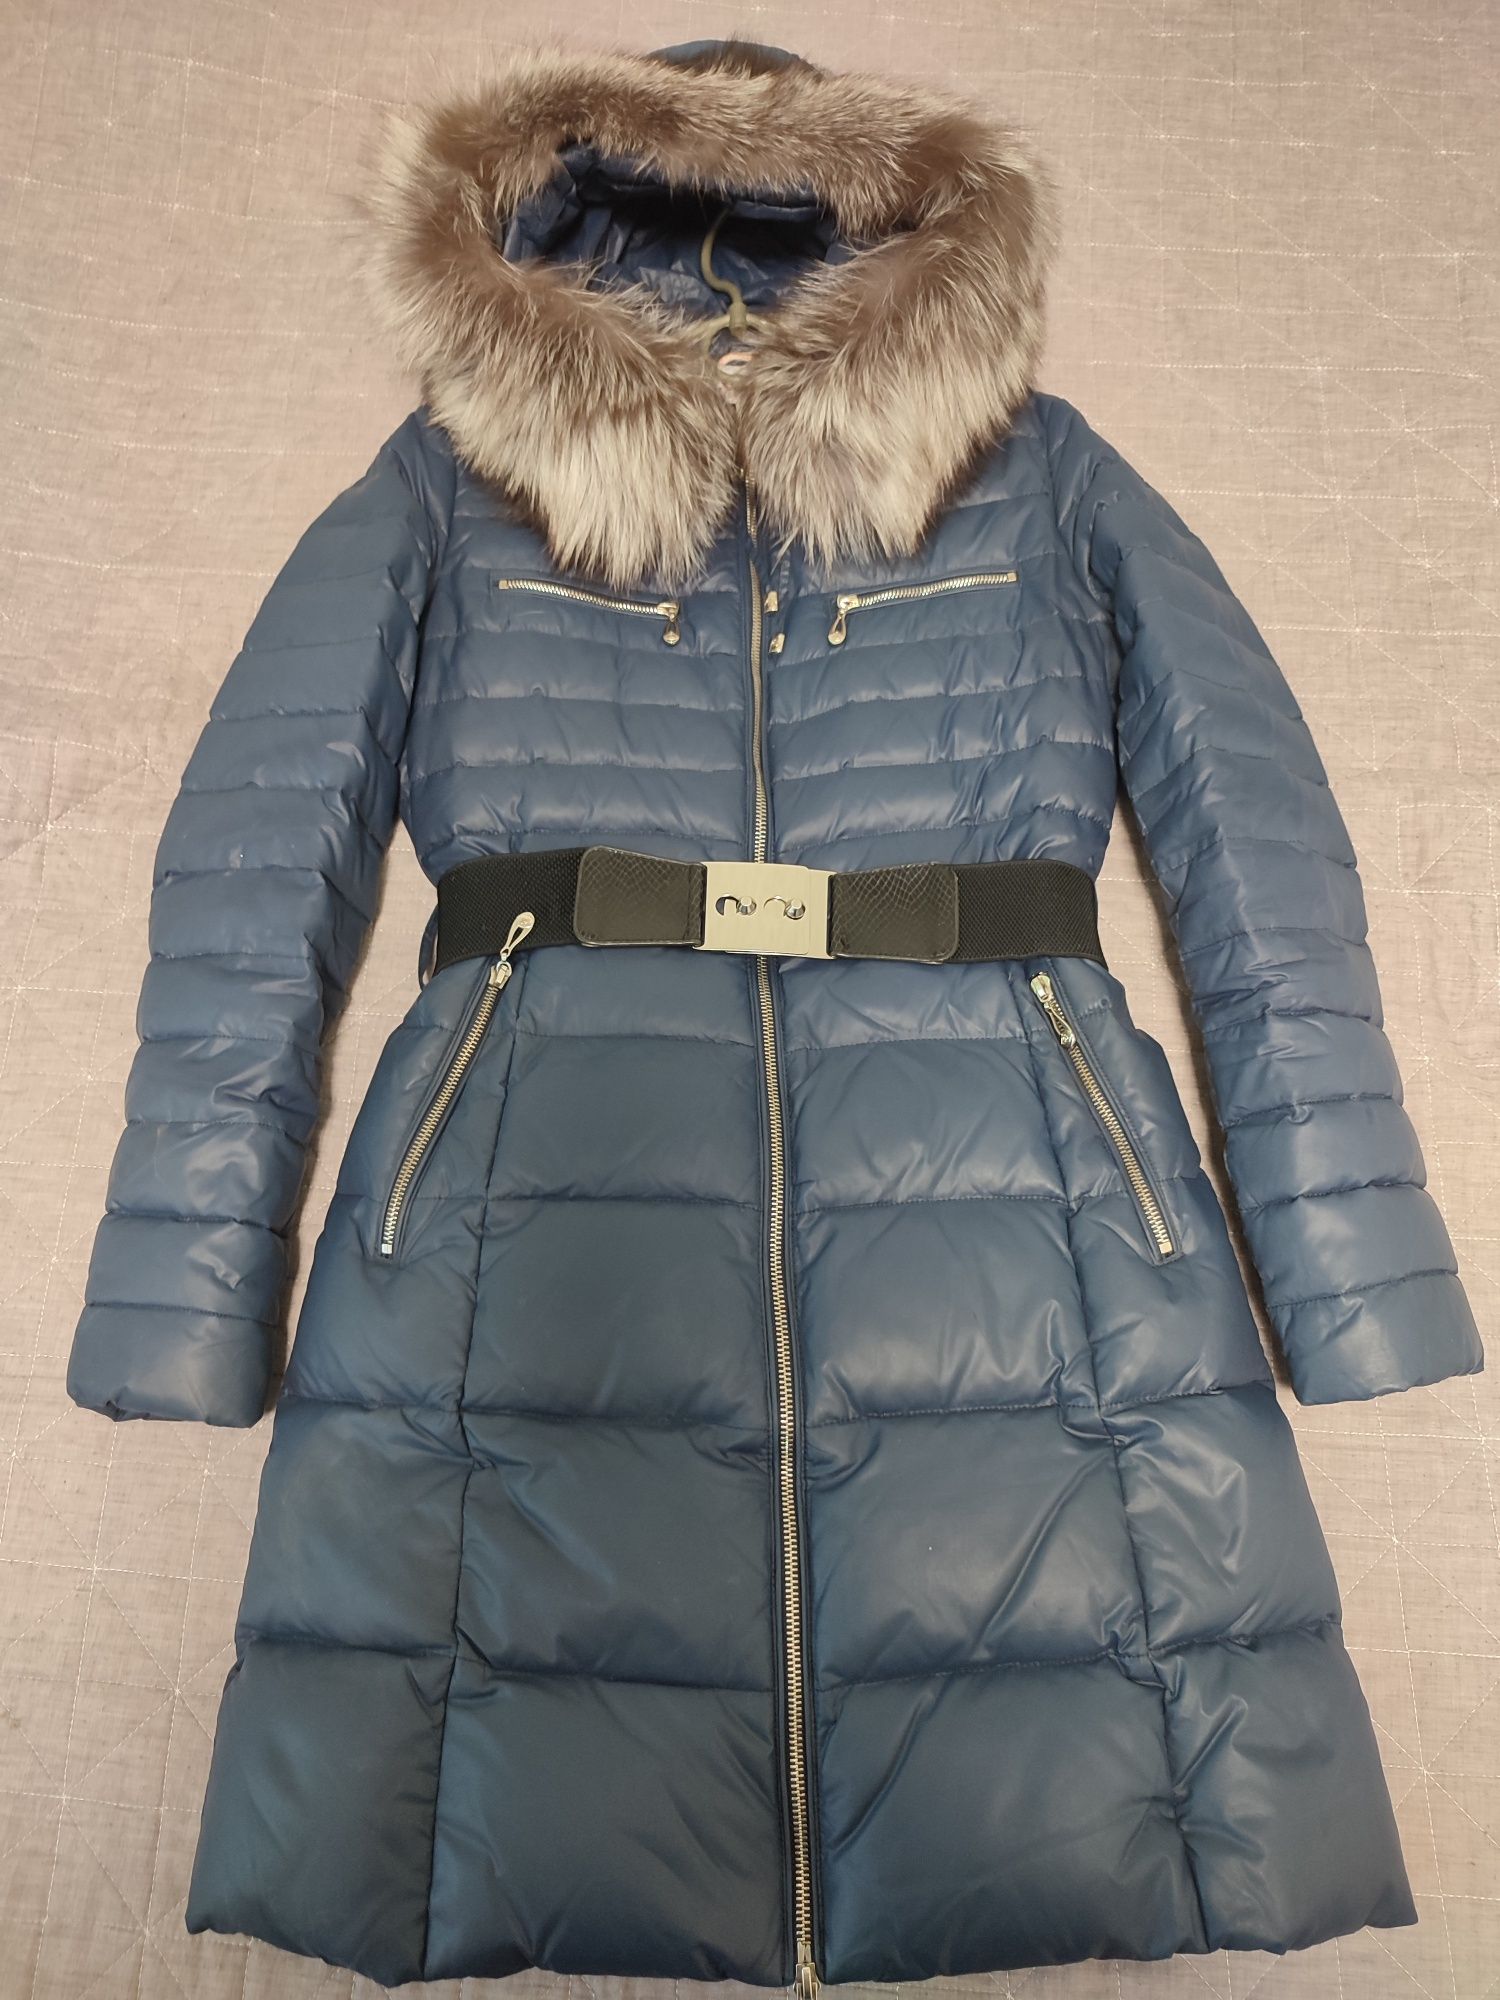 Пуховик пальто женский зимний 44 размер, М